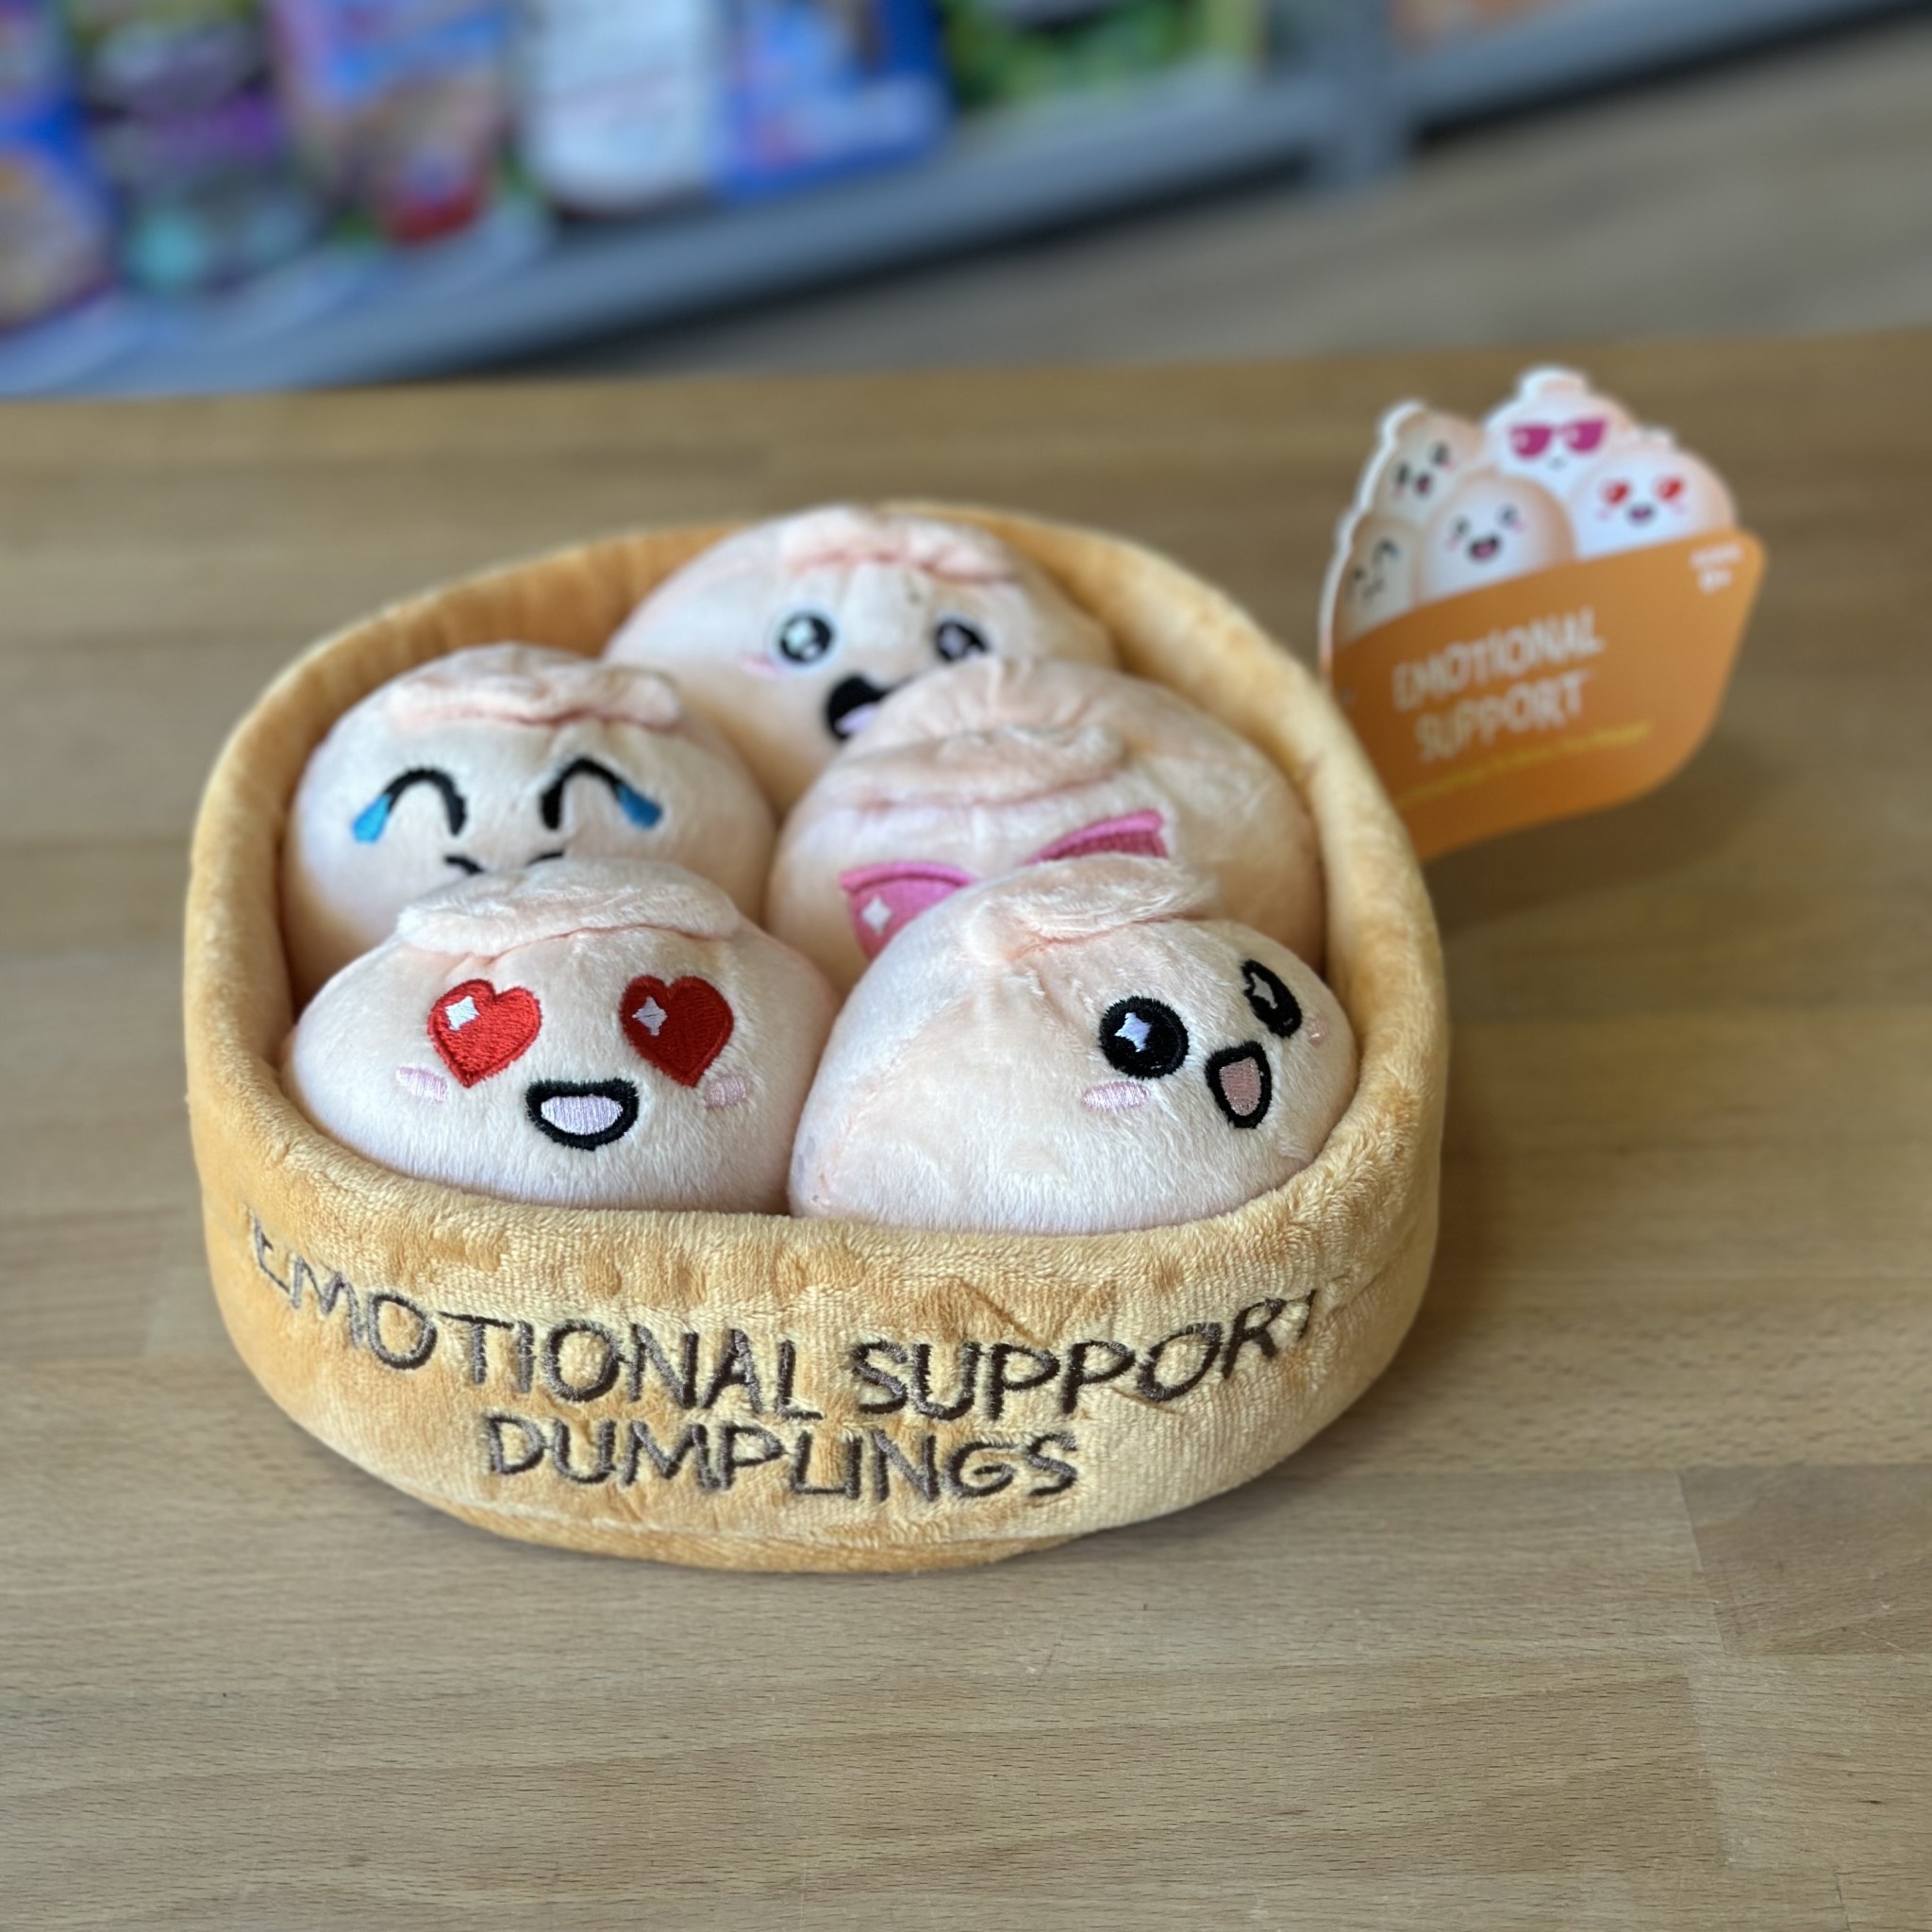 Emotional Support Dumplings